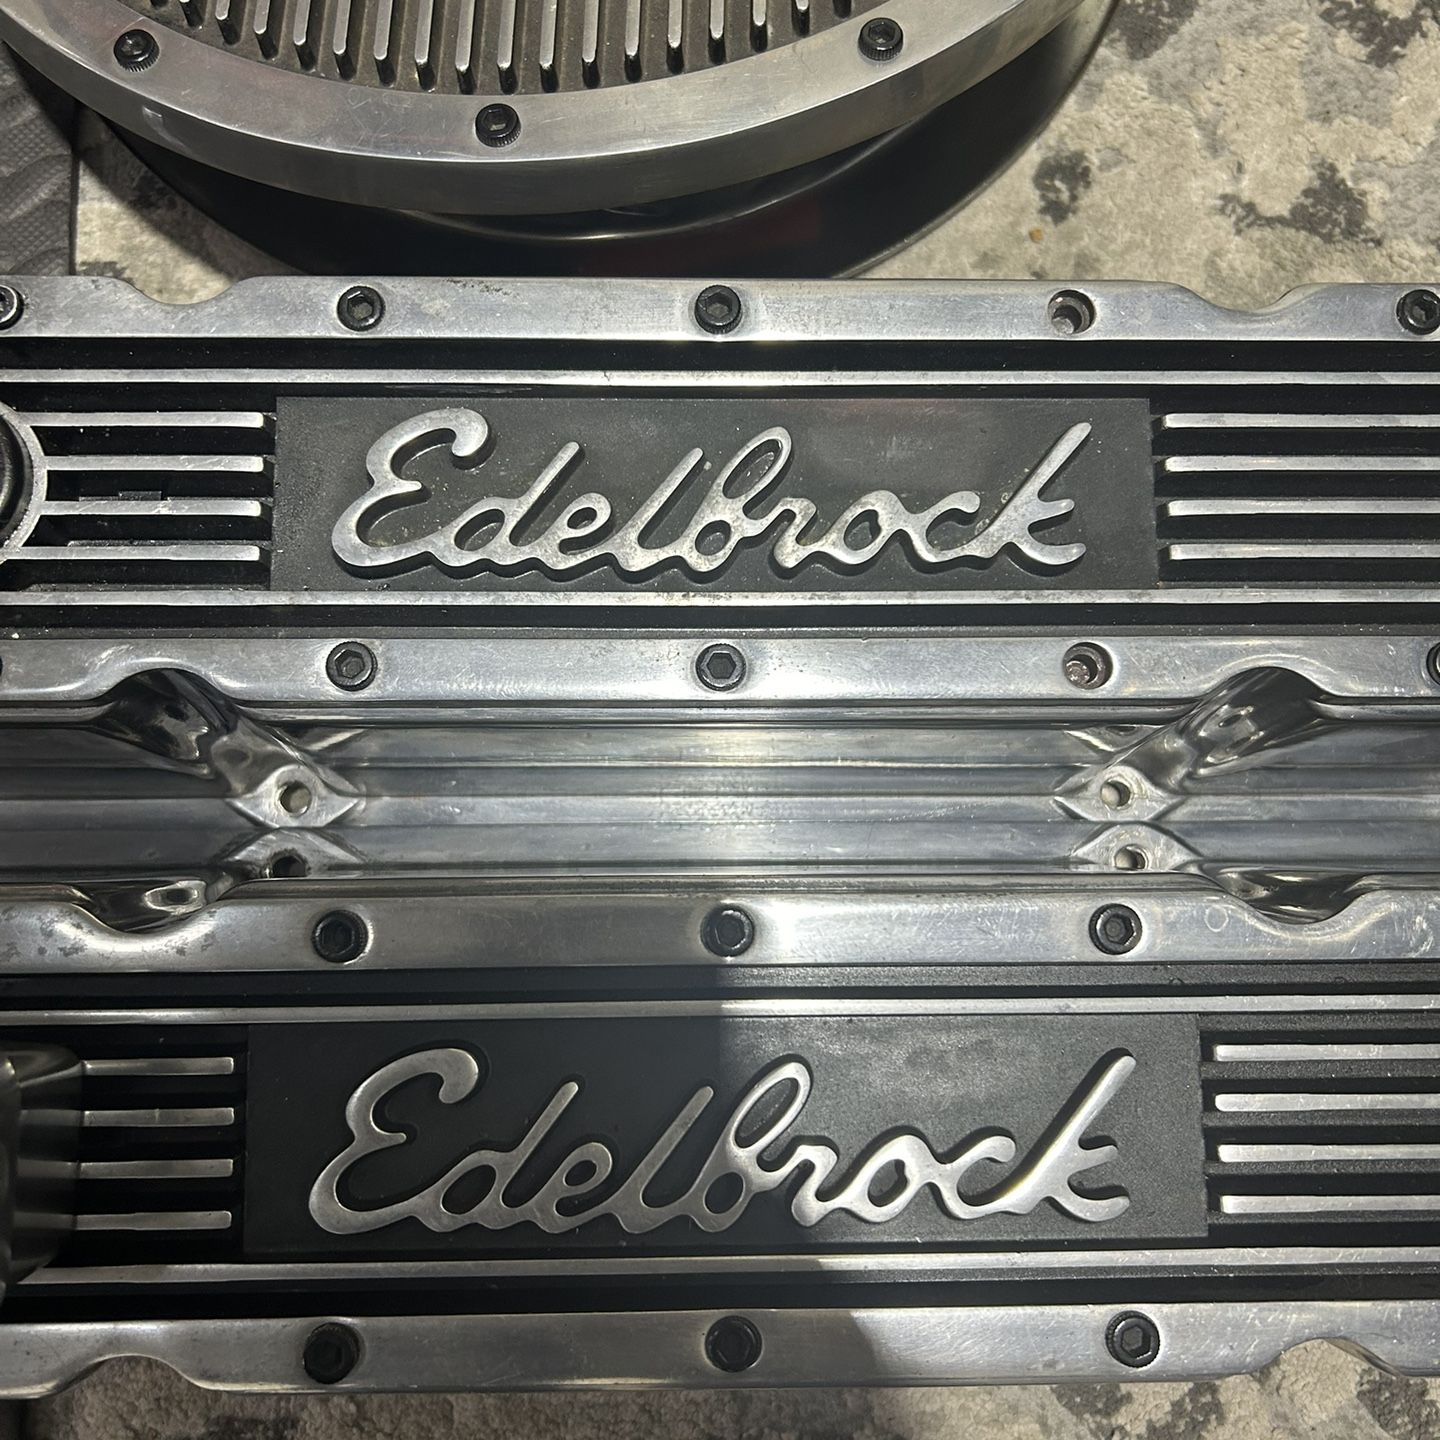 Chevy 350 Edelbrock